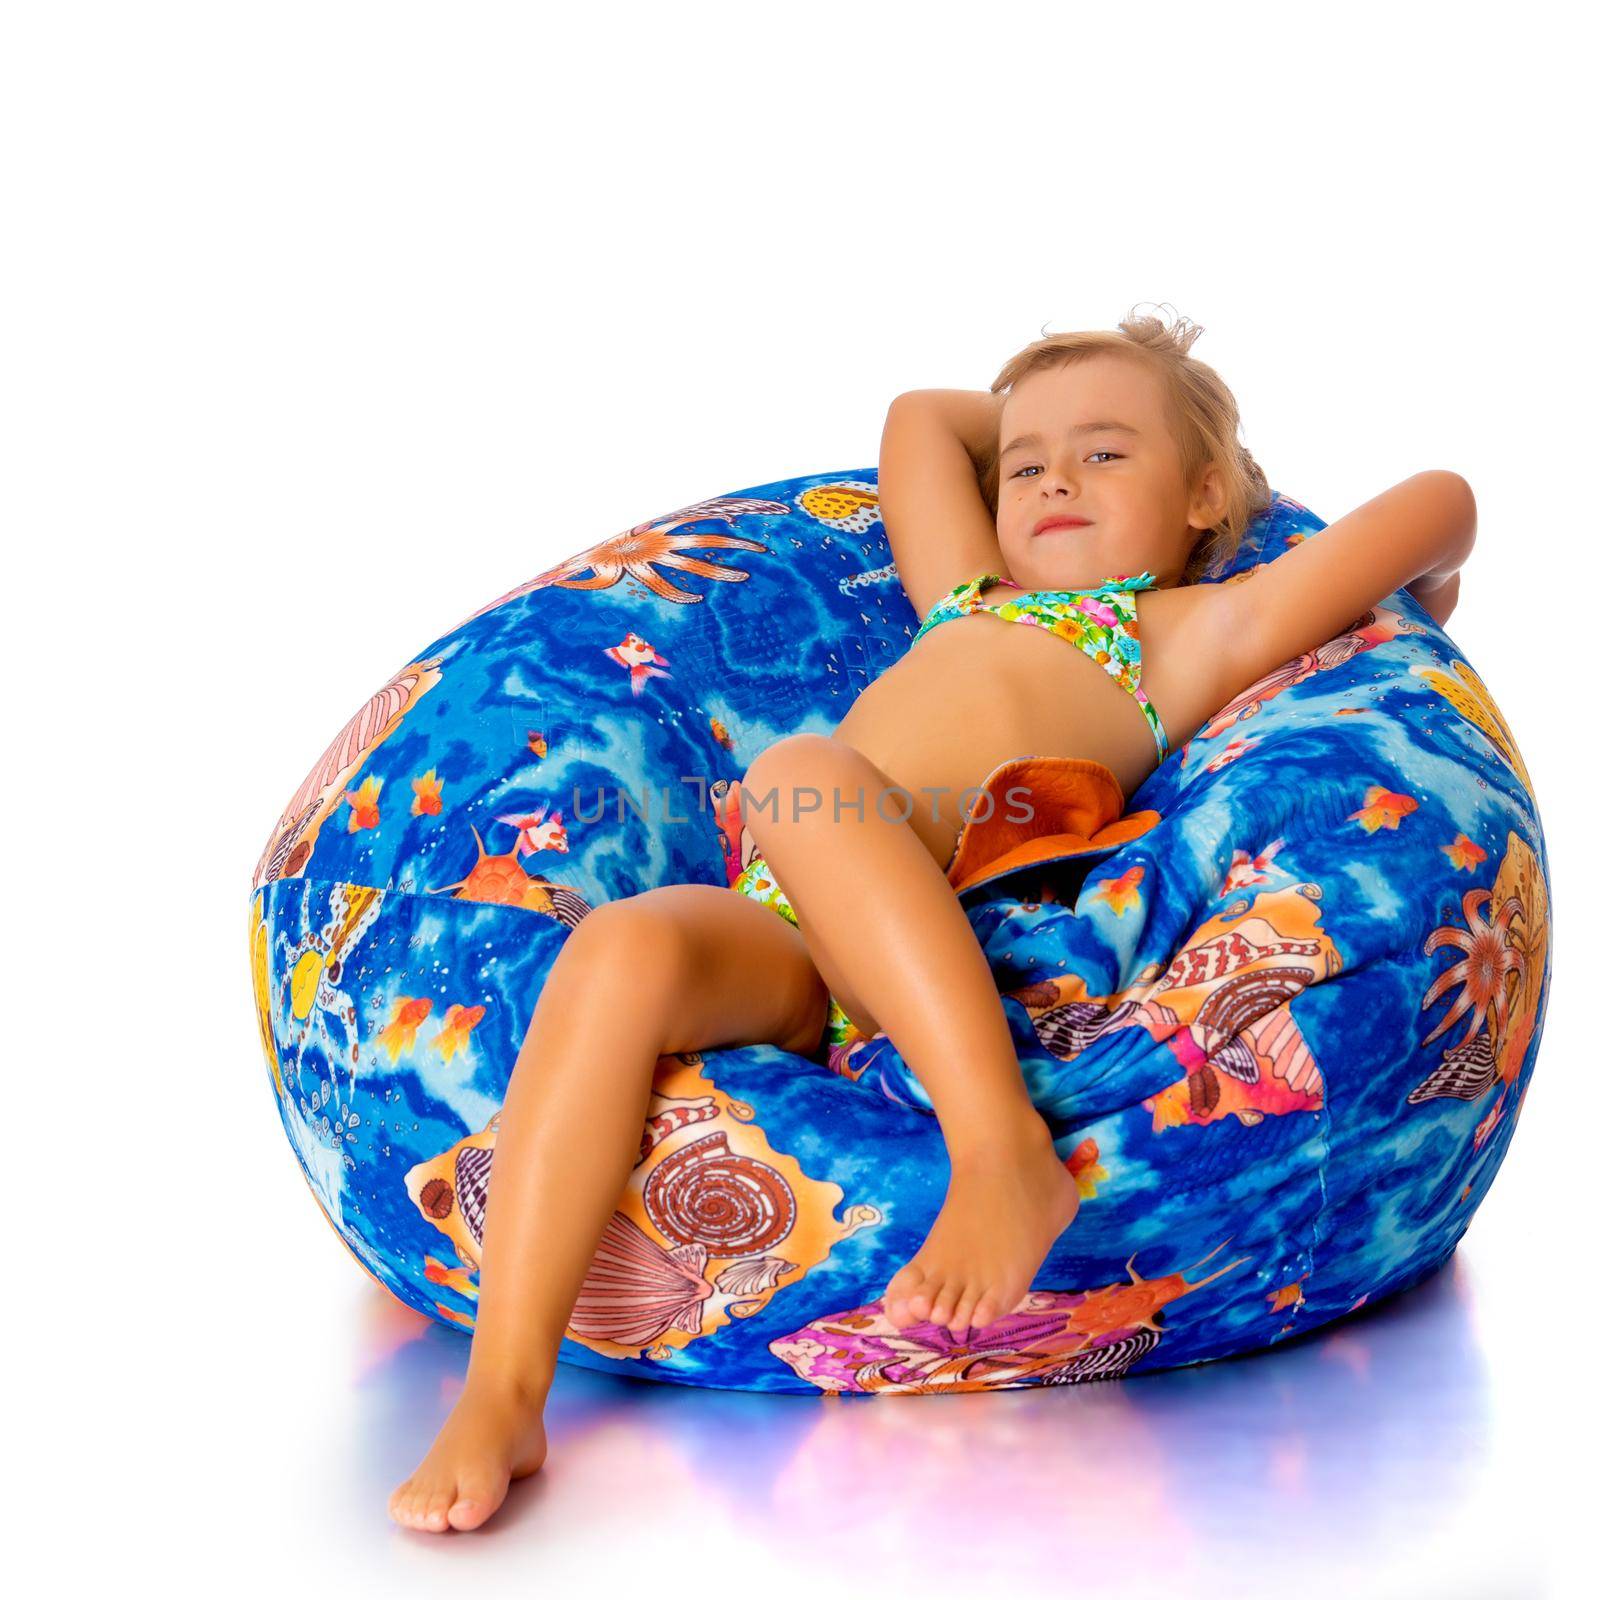 Little girl in a swimsuit is sitting on a pillow. by kolesnikov_studio